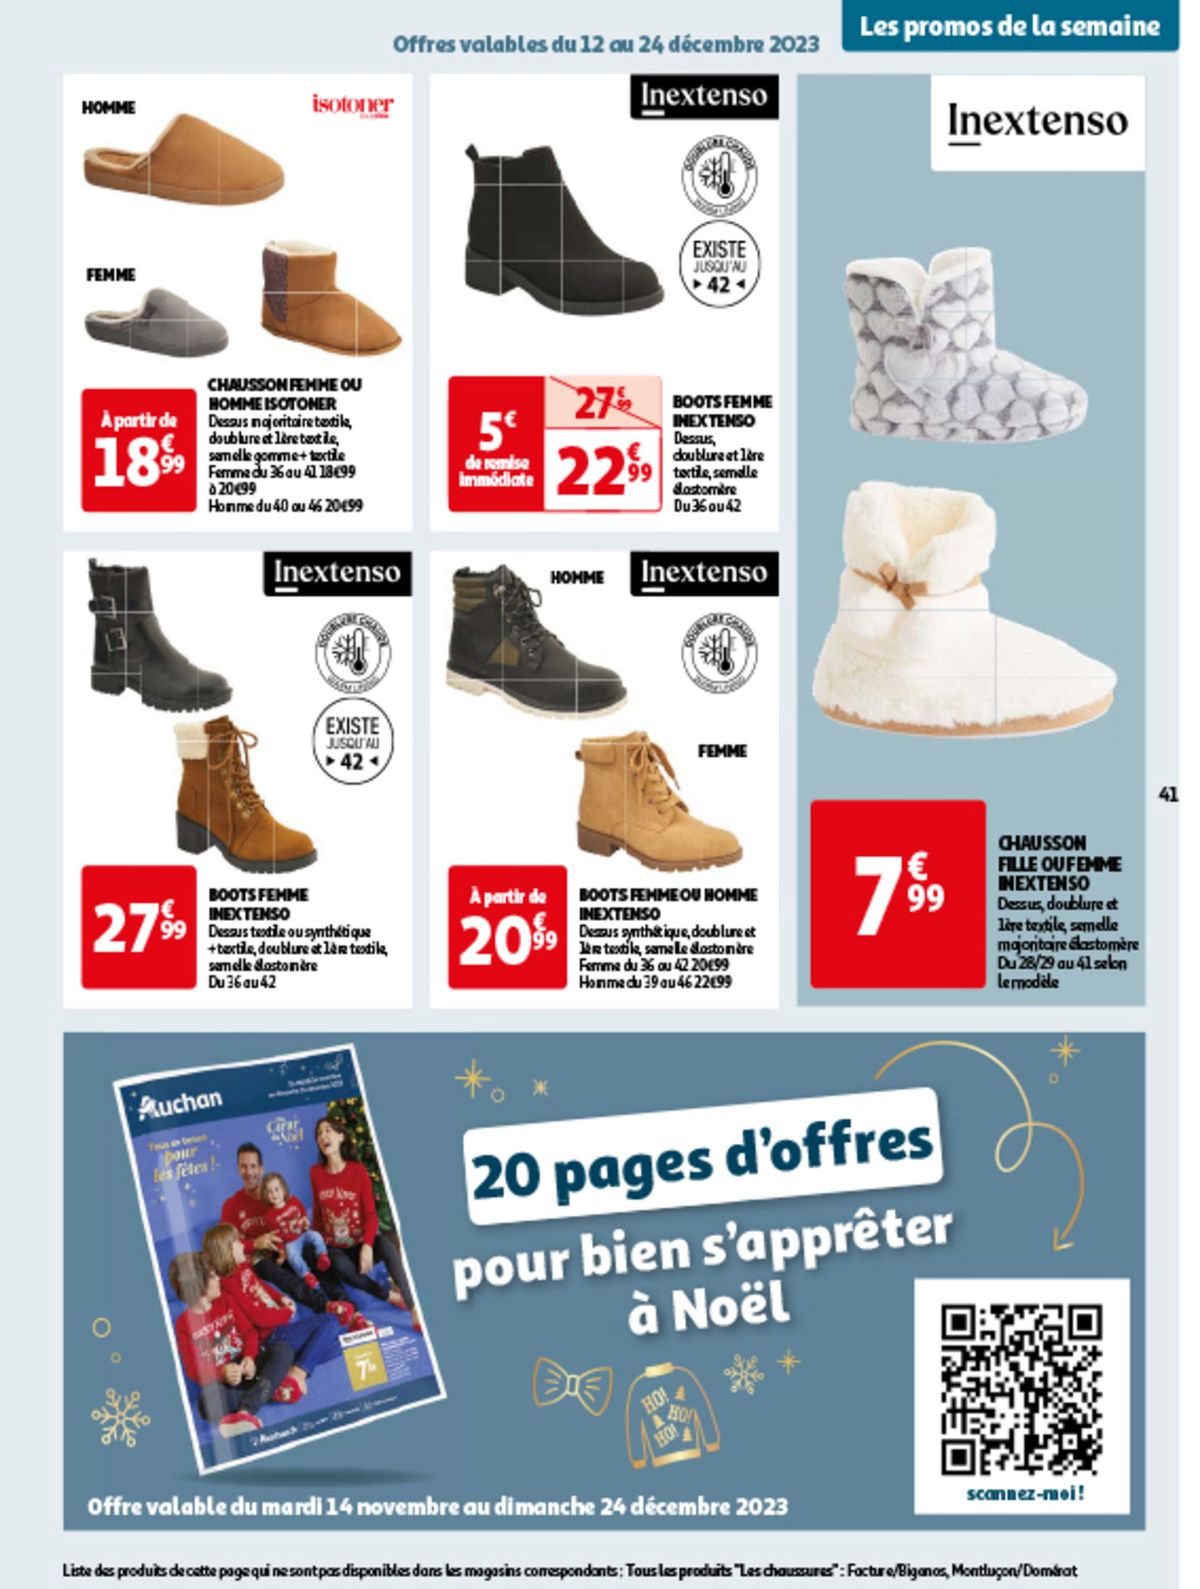 Catalogue Les fêtes qui font waaoh !, page 00041